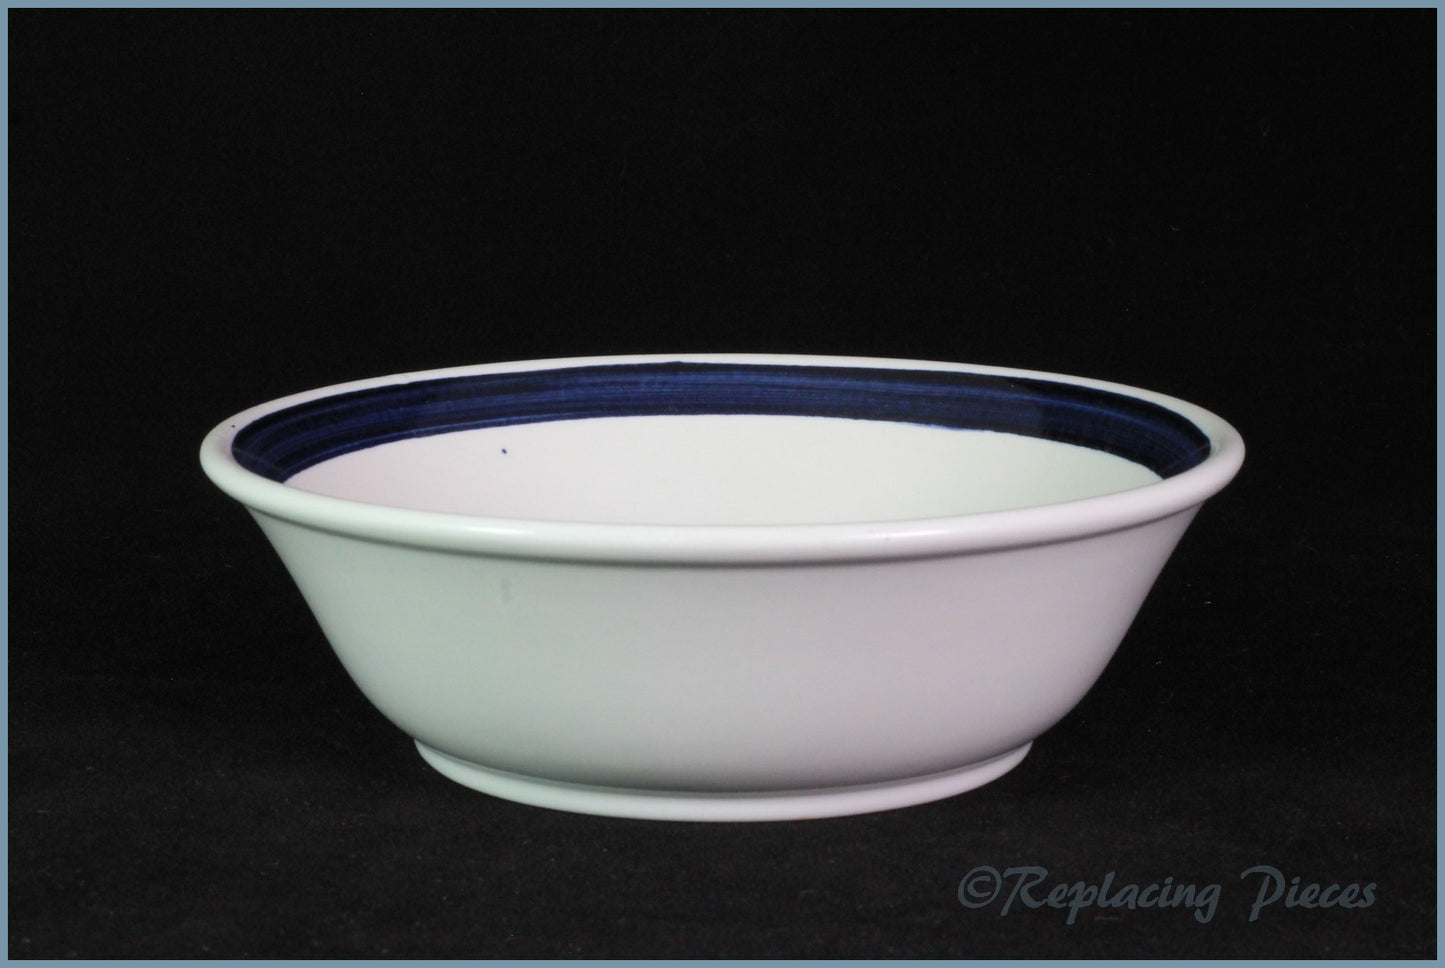 Royal Doulton - Tangier (LS1005) - 6 1/2" Cereal Bowl